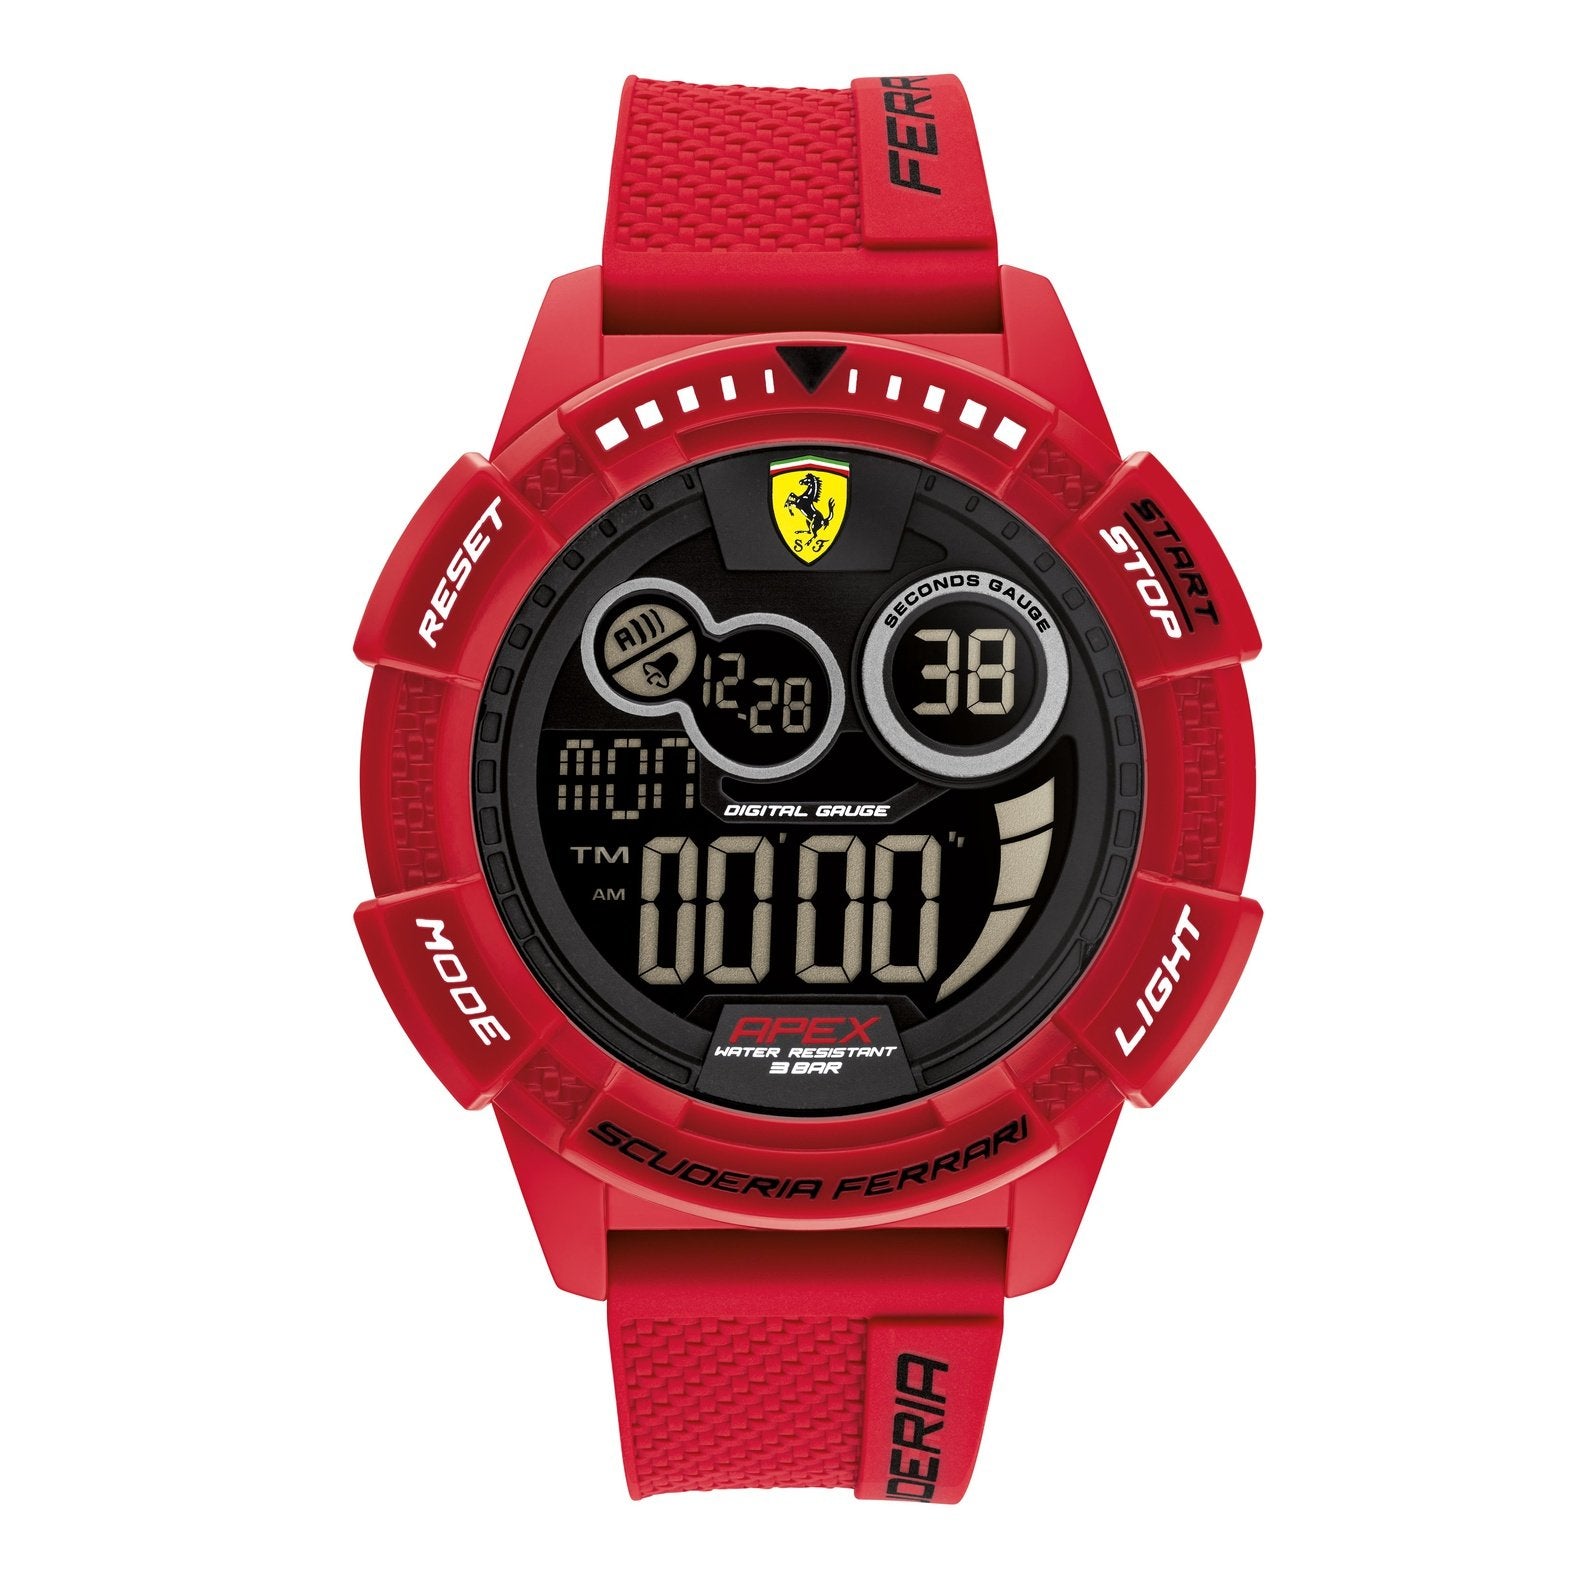 Men's Apex Superfast Watch 0830857 Scuderia Ferrari